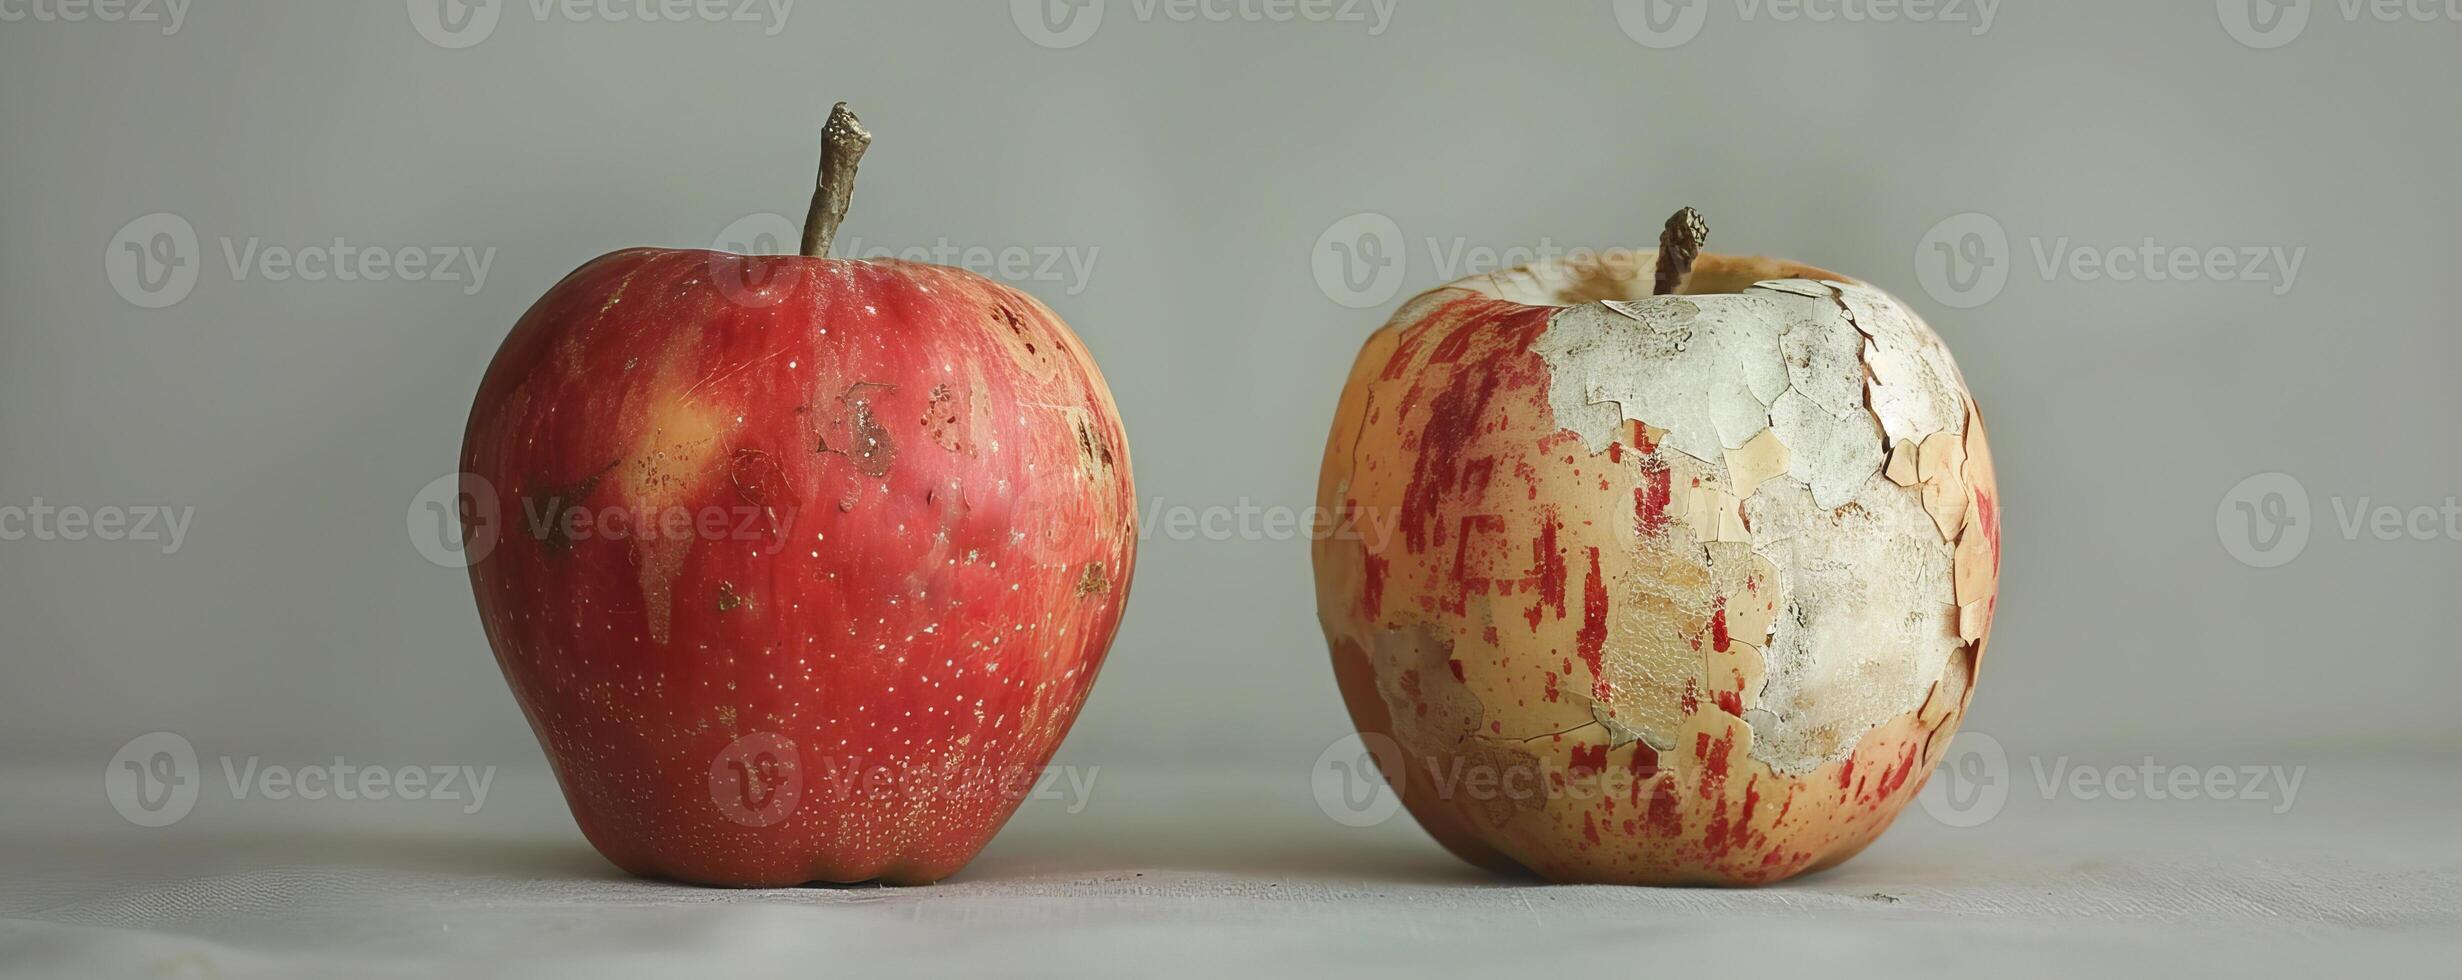 ai generado Fresco rojo manzana siguiente a Envejecido, peladura manzana en neutral antecedentes foto